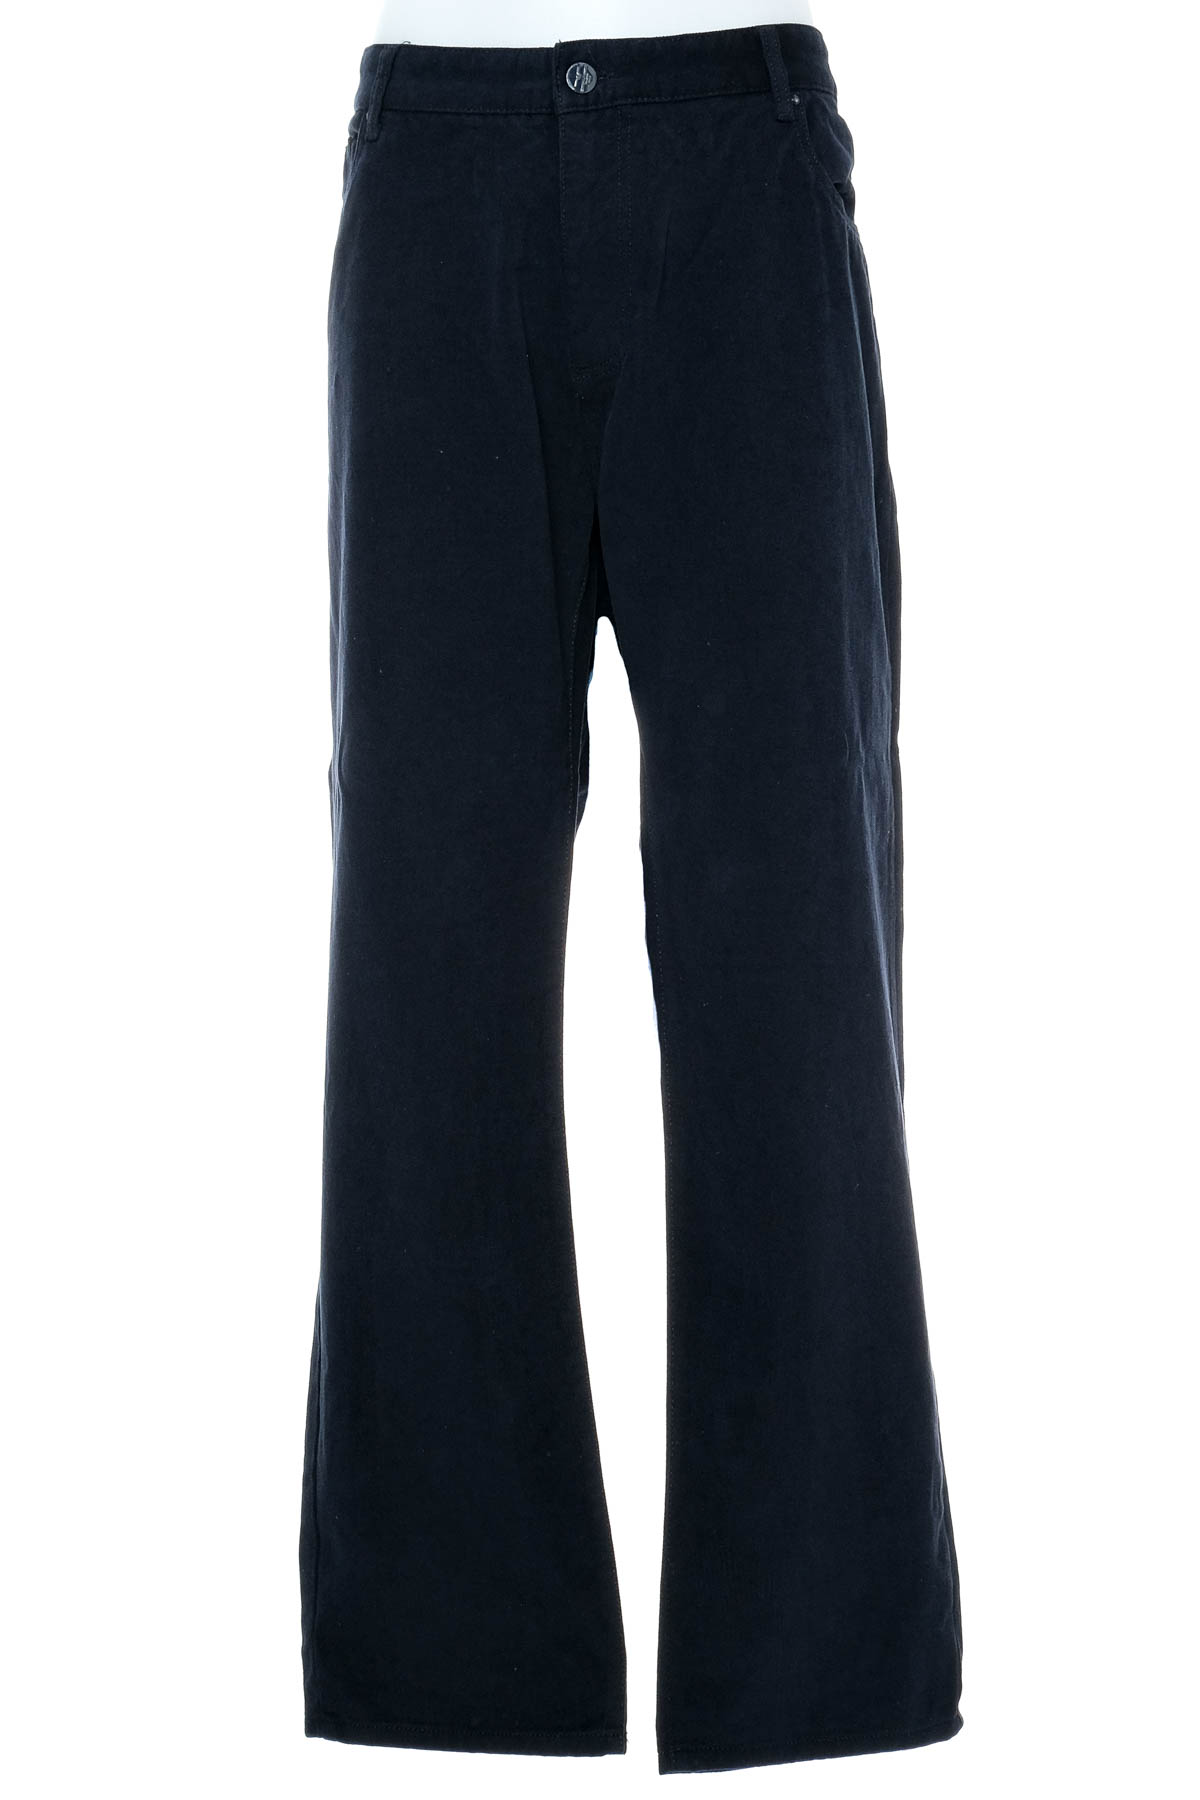 Men's trousers - Armani Jeans - 0